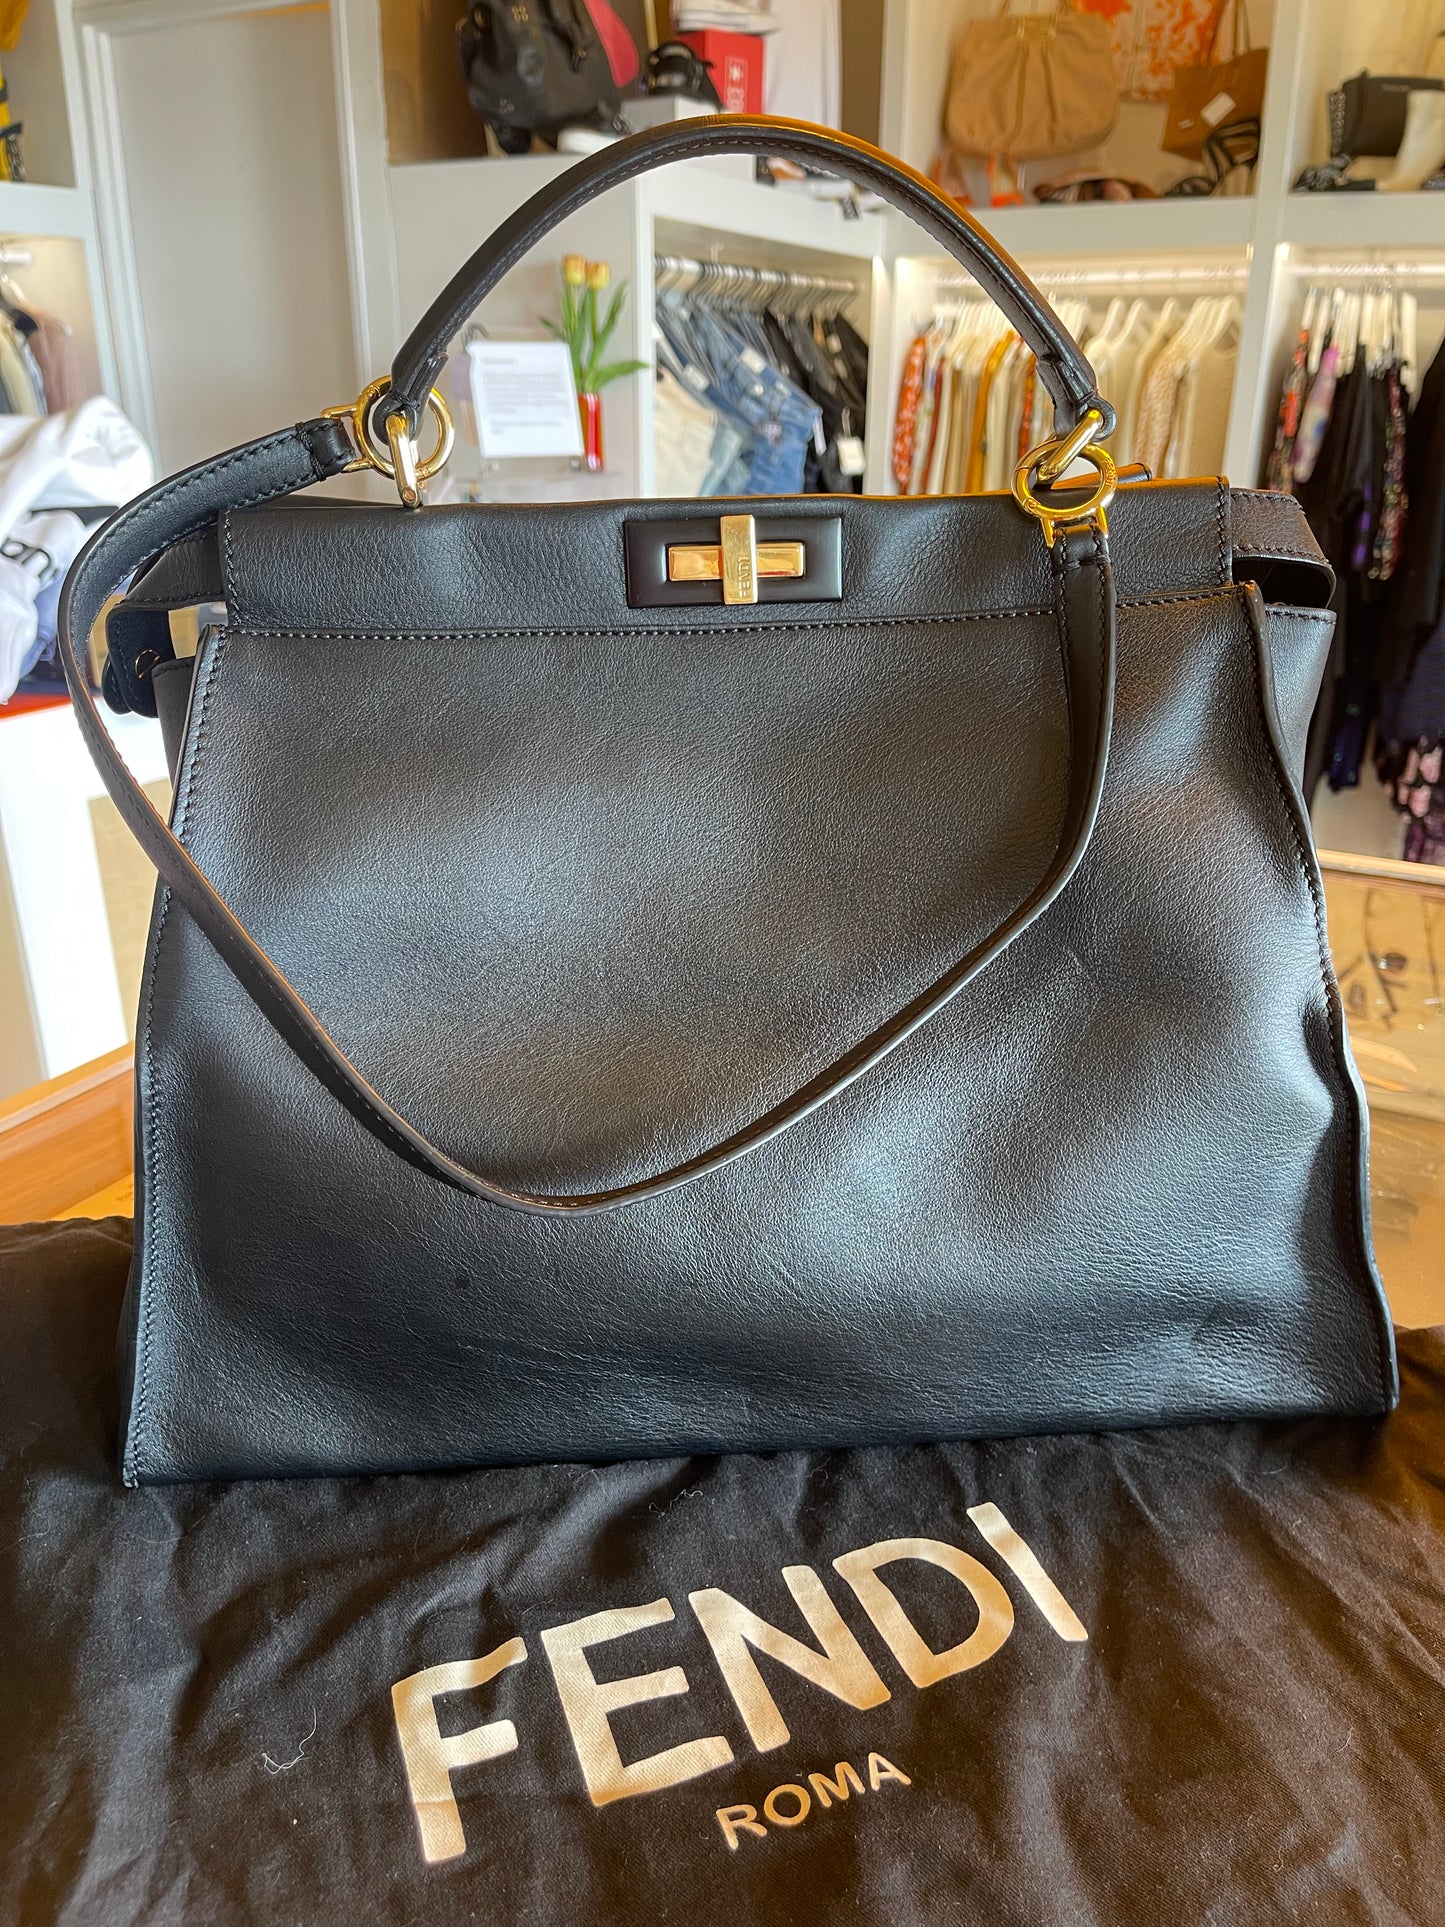 Fendi Peekaboo Black Leather Bag